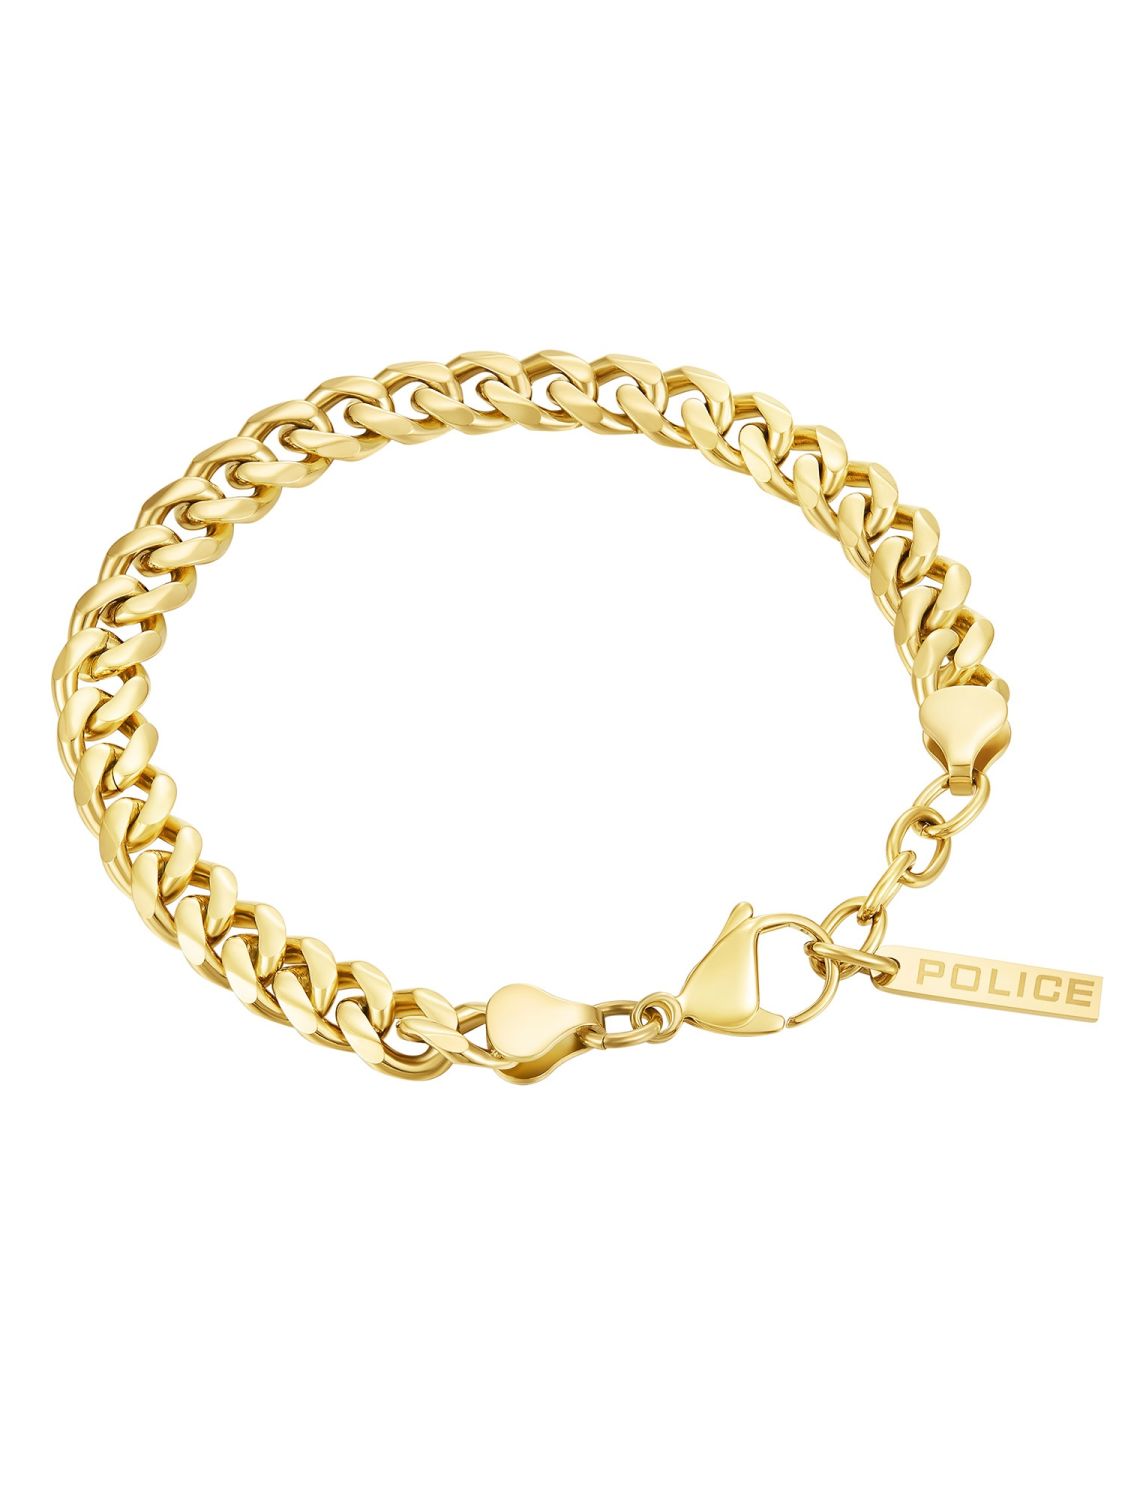 Police Men's Bracelet Gold Plated Stainless Steel PEAGB0006604 • uhrcenter